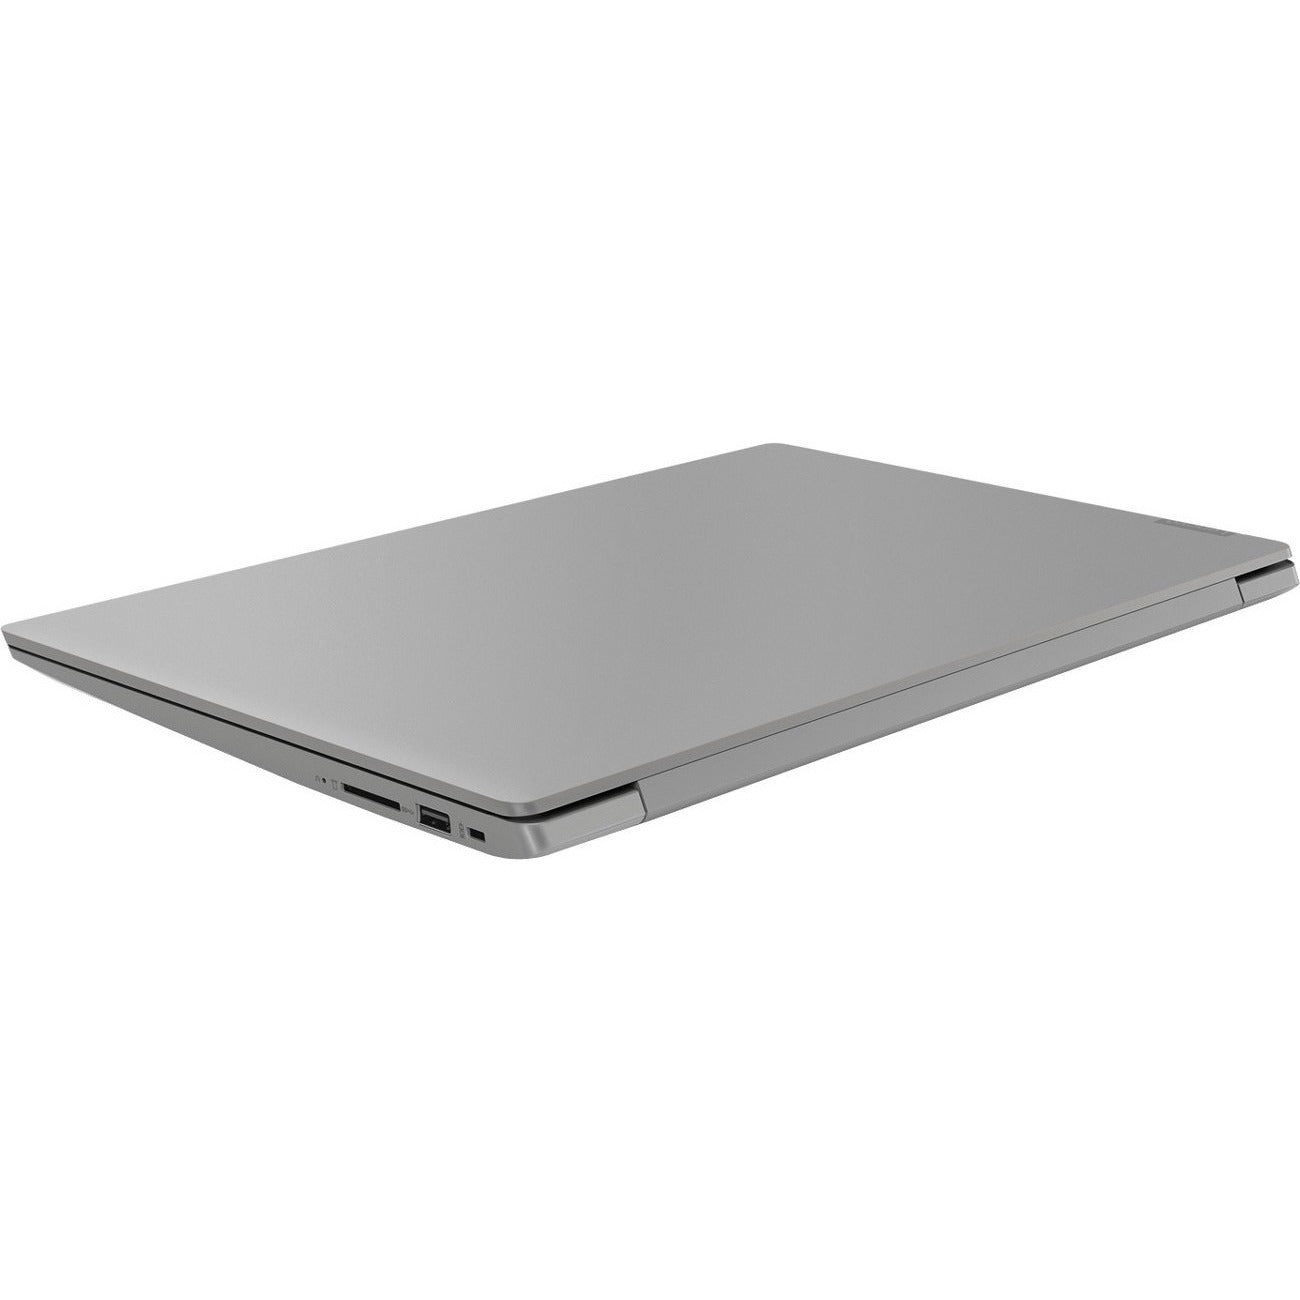 Lenovo ideapad 330S 15.6-In i7 12GB + 16GB Optane 1TB HDD Laptop - 81F500TPUS